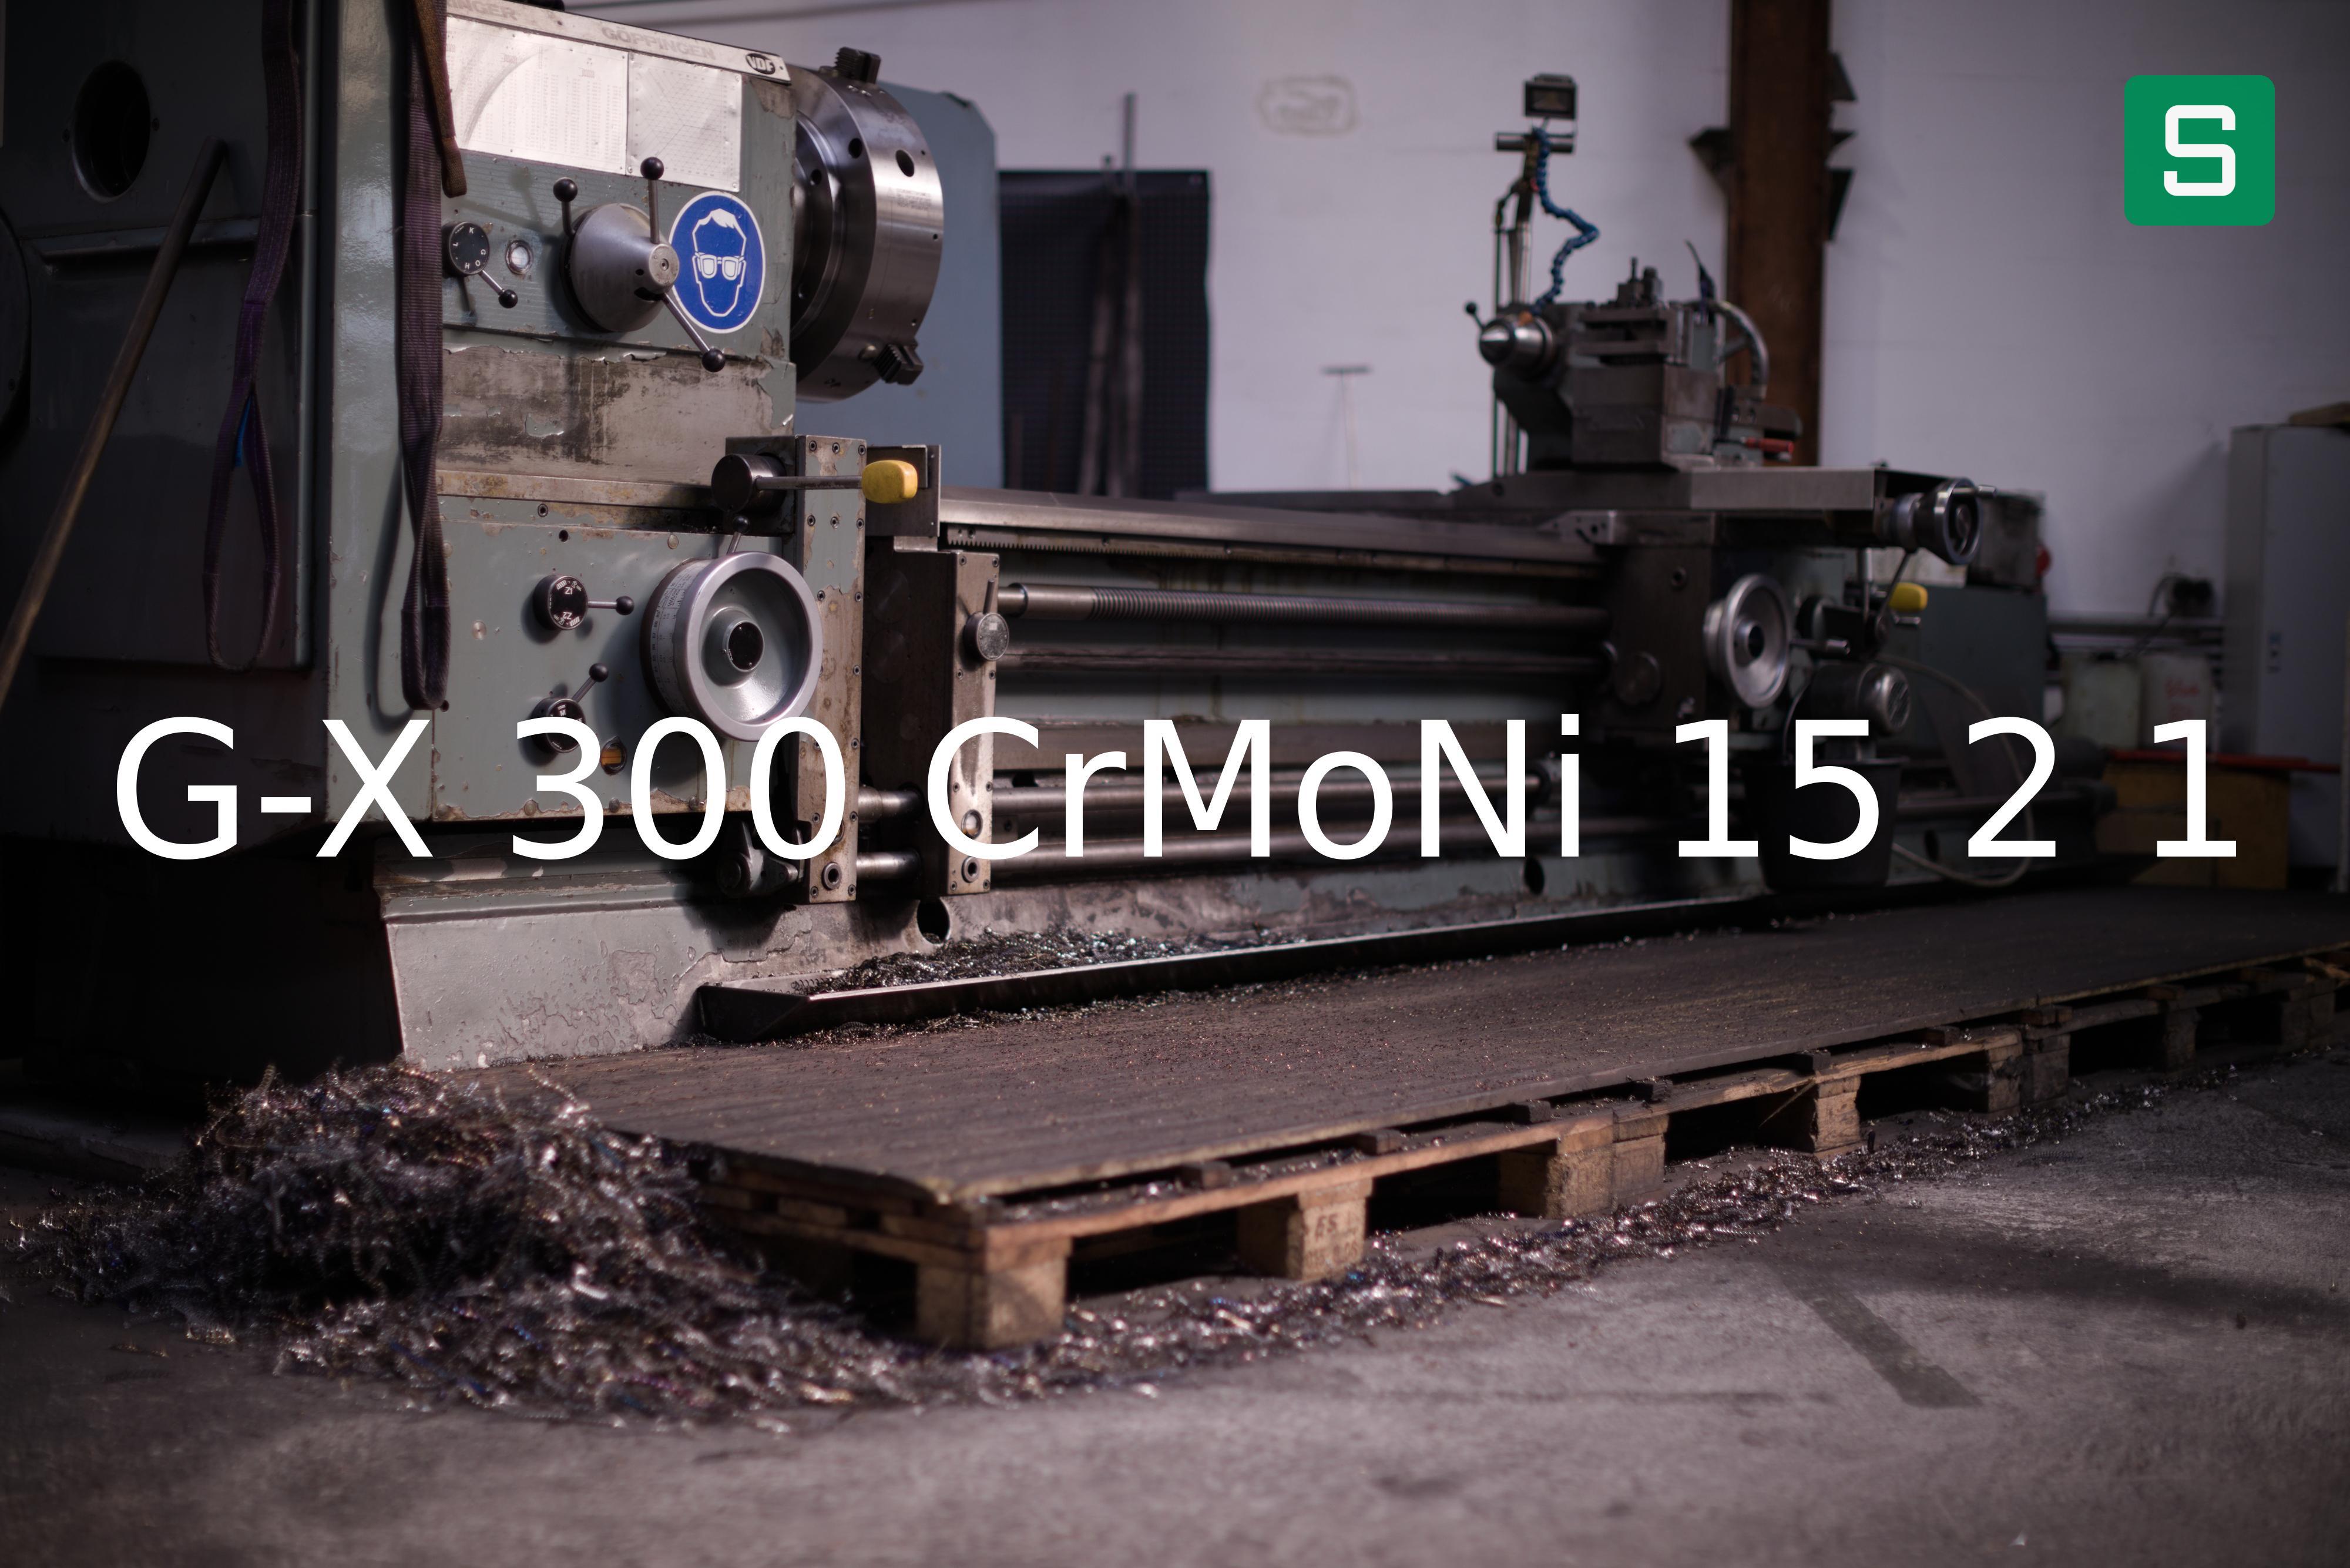 Steel Material: G-X 300 CrMoNi 15 2 1